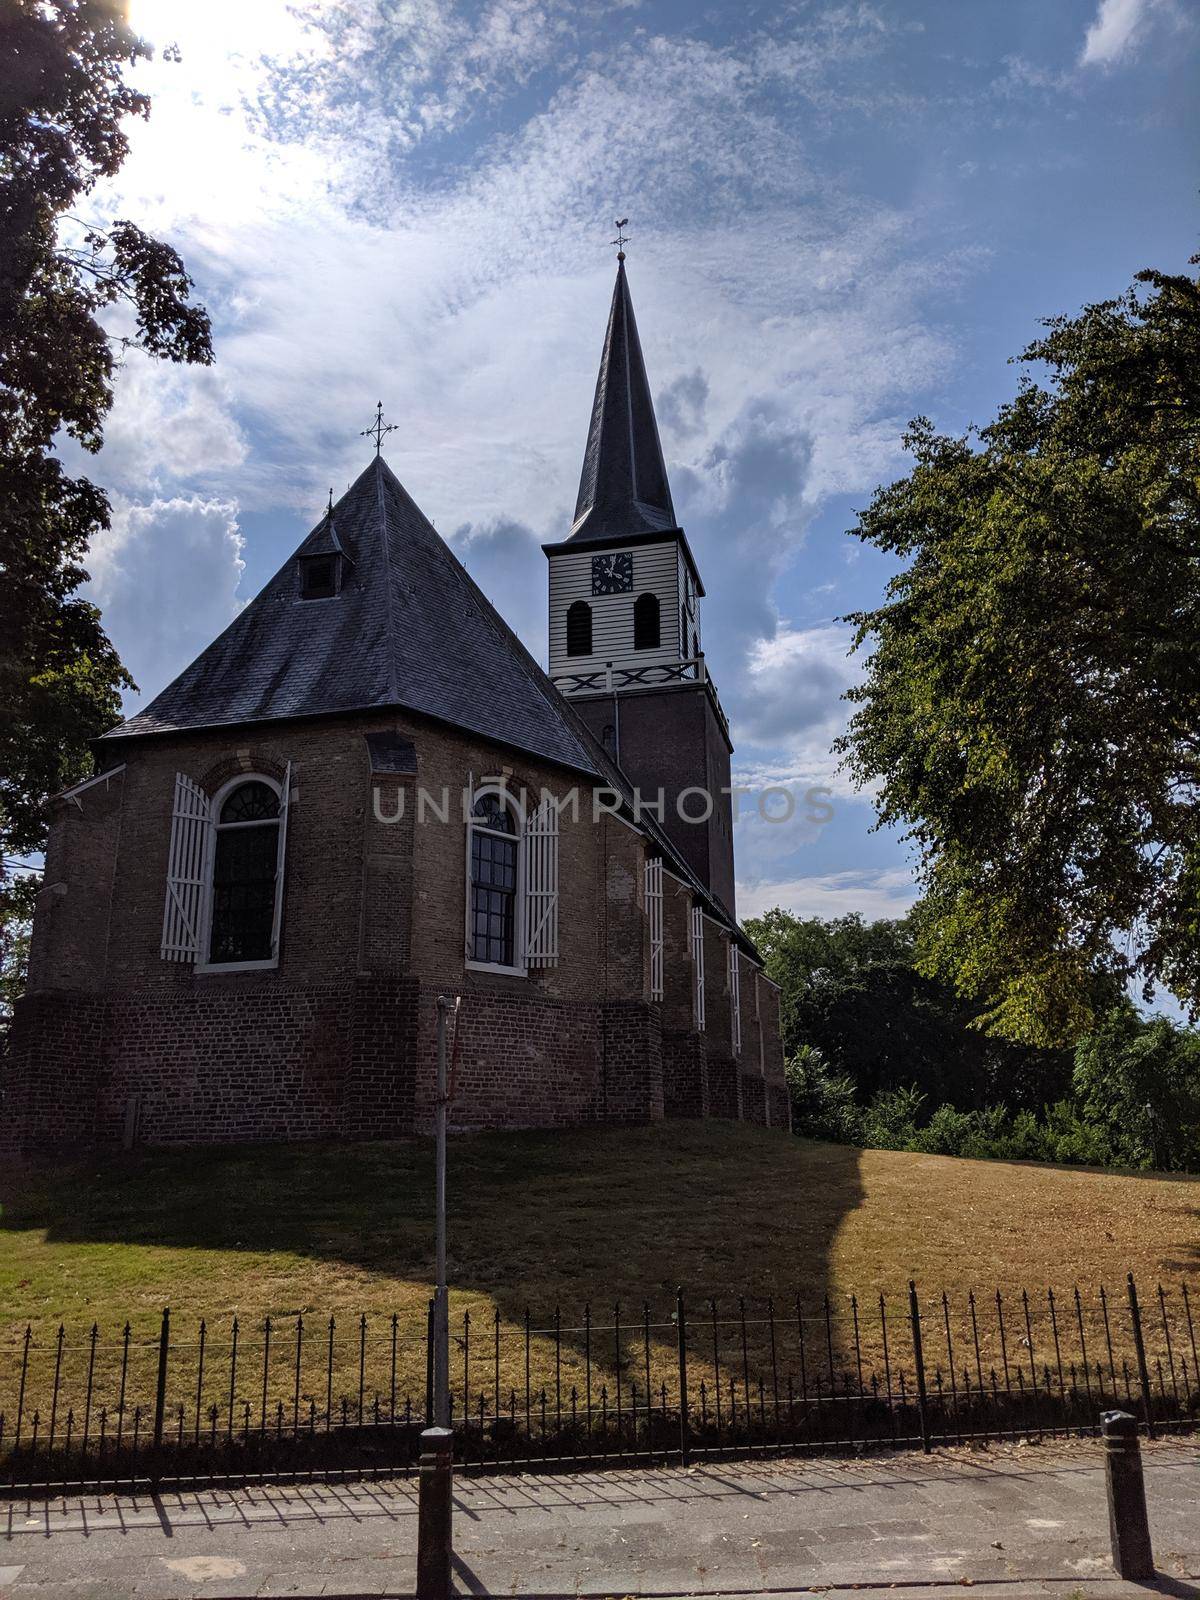 Church in Wolvega by traveltelly